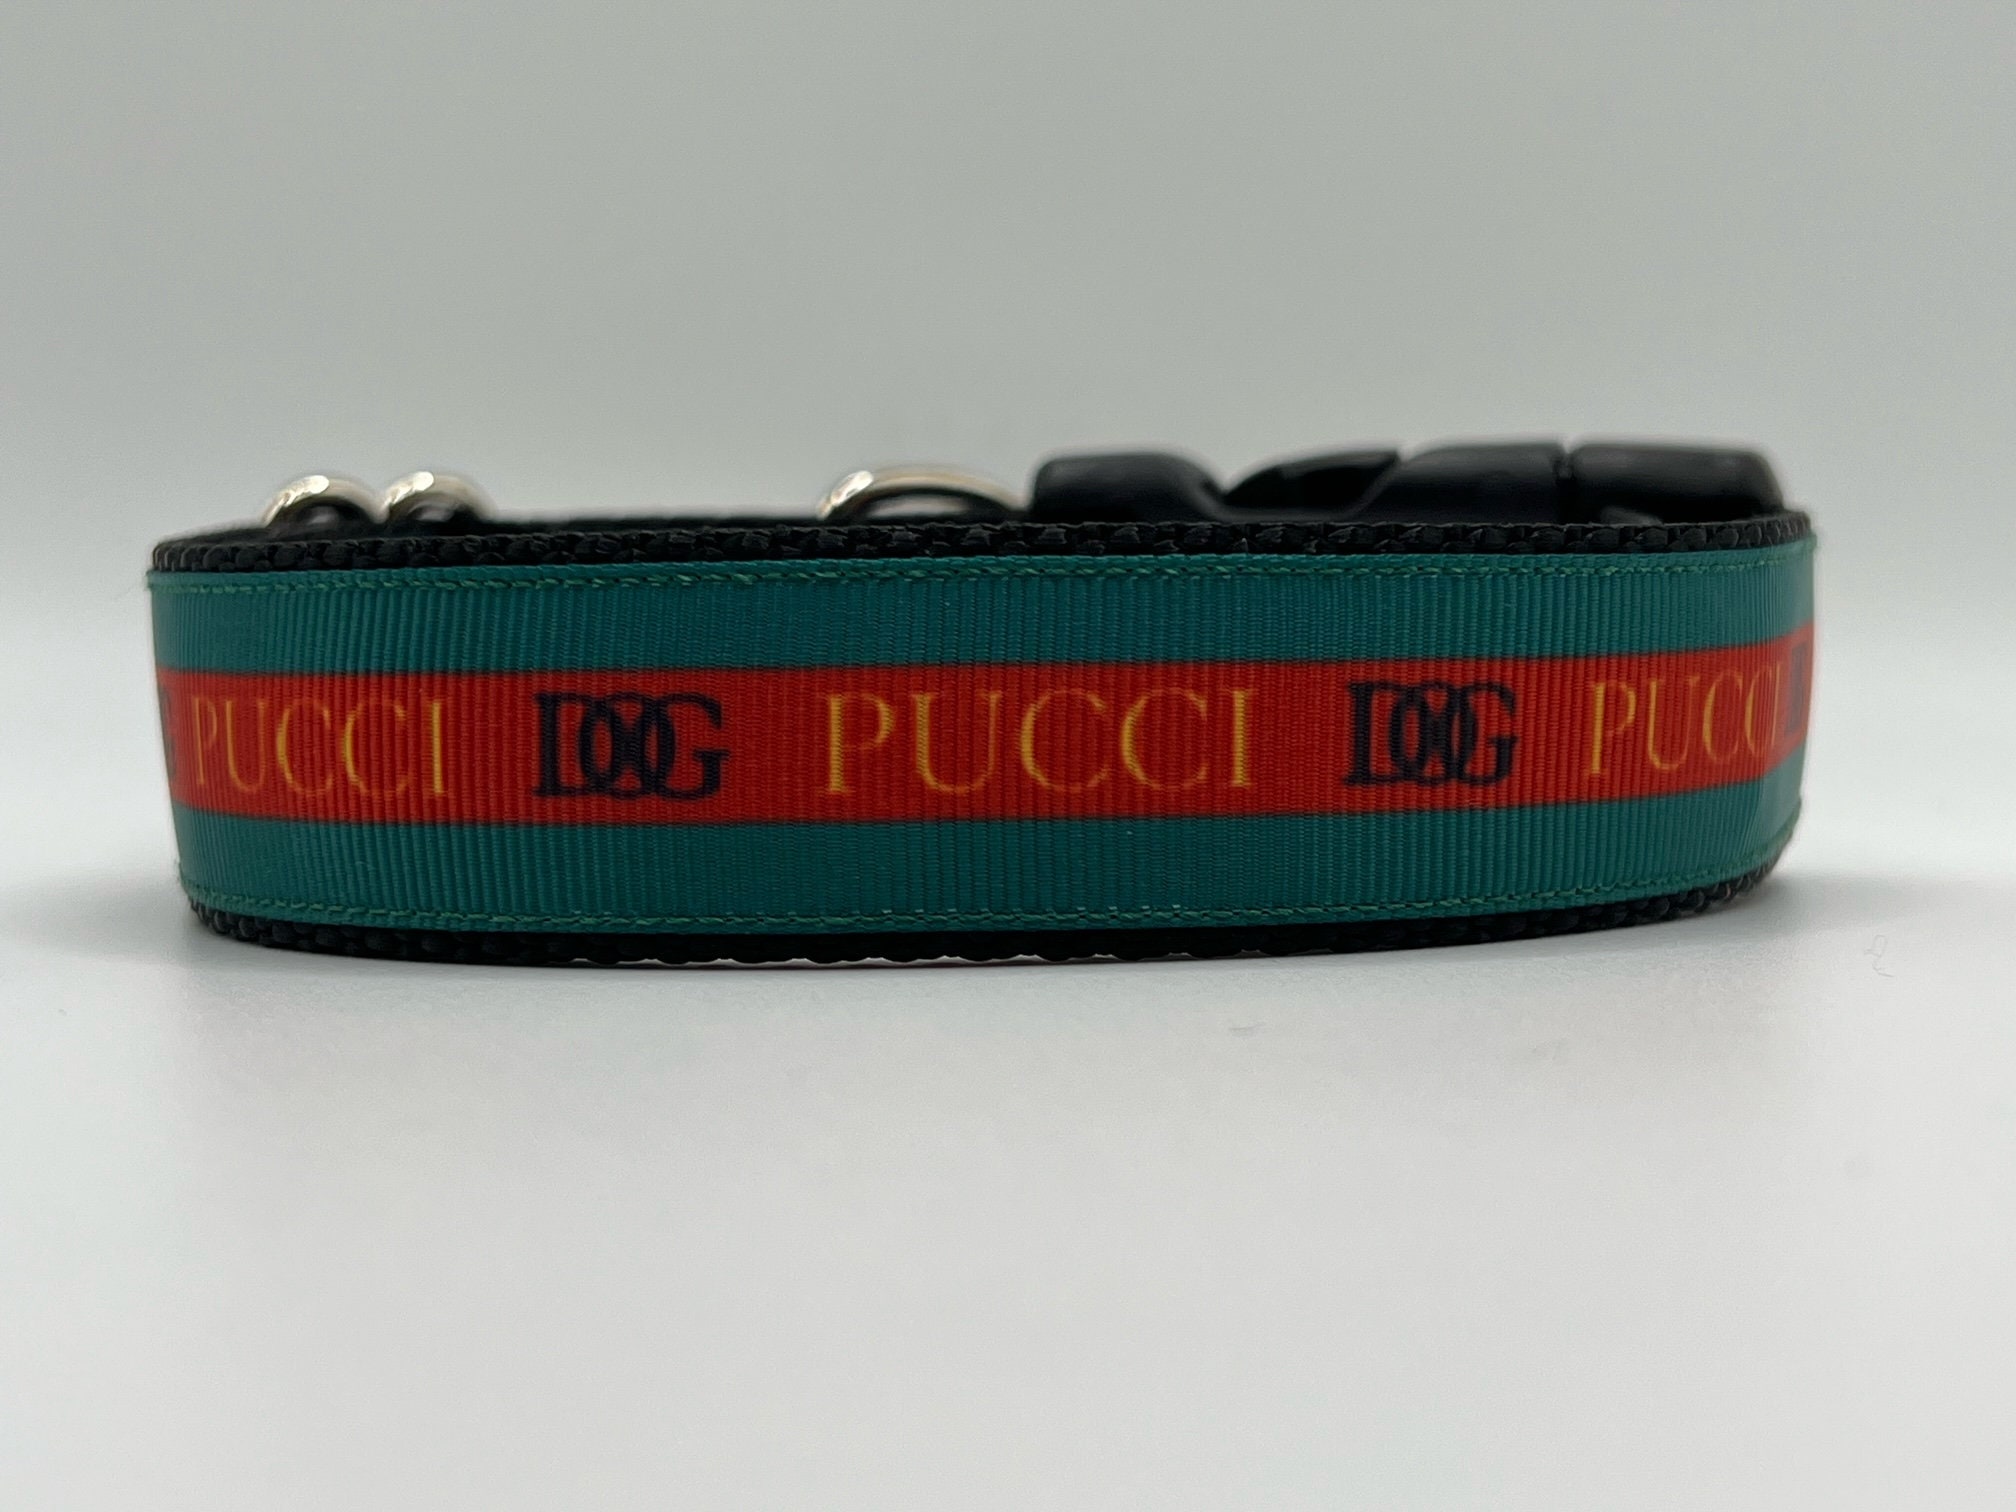 Louis Vuitton Dog Collar — Artistic Xpressions